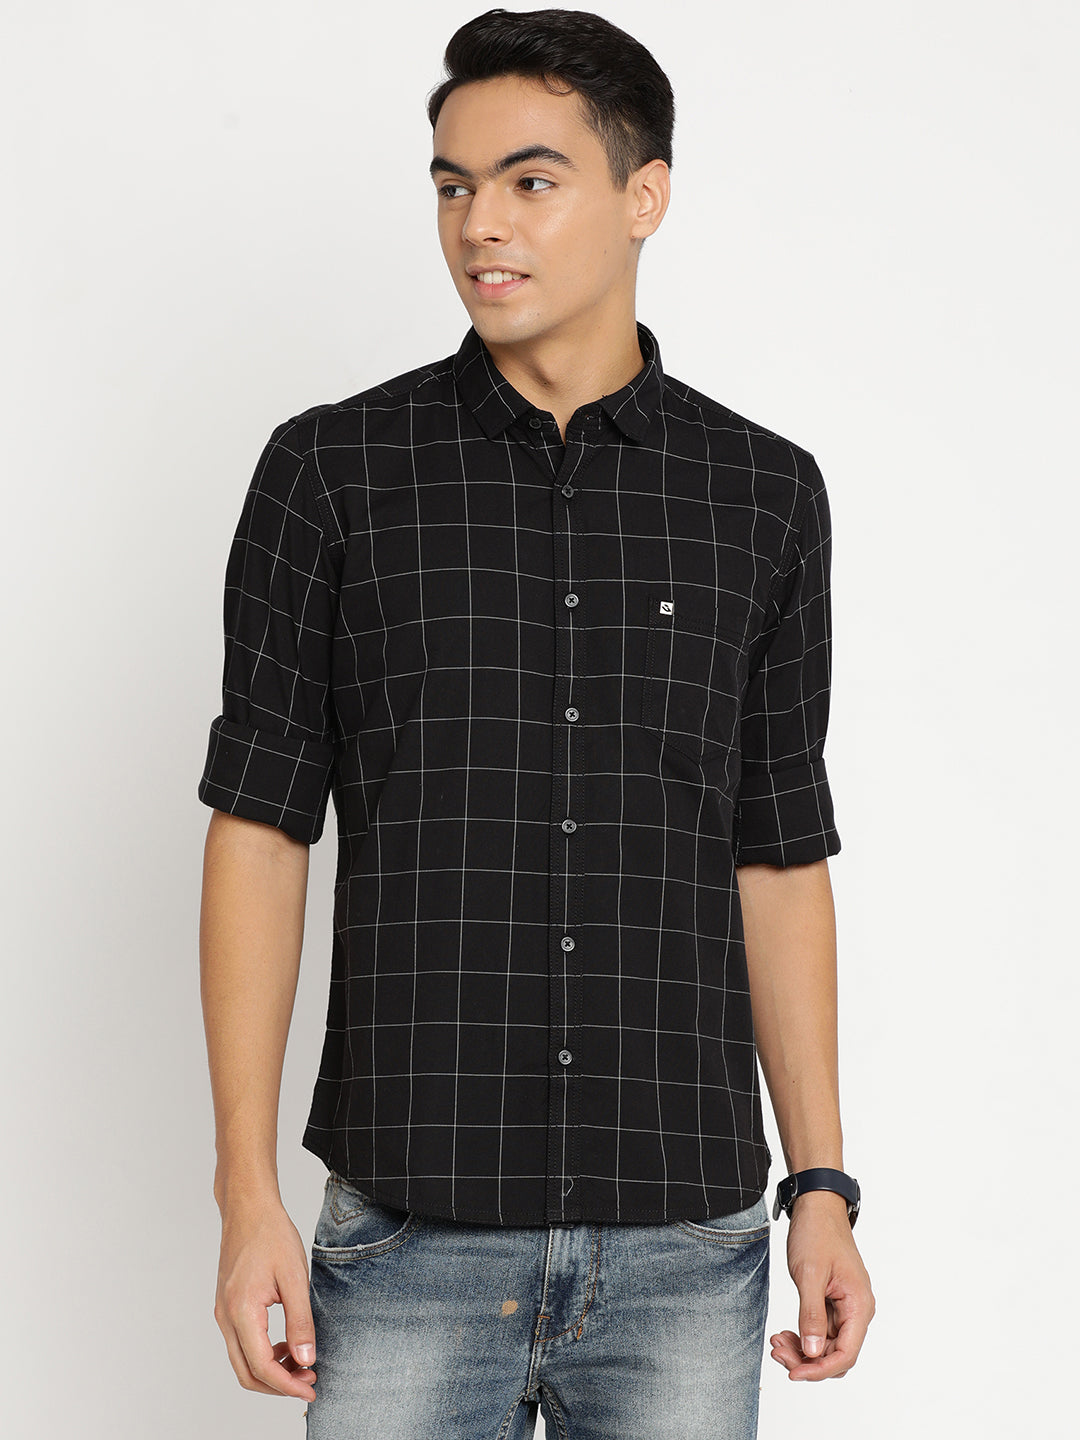 Black Checkerd Shirt